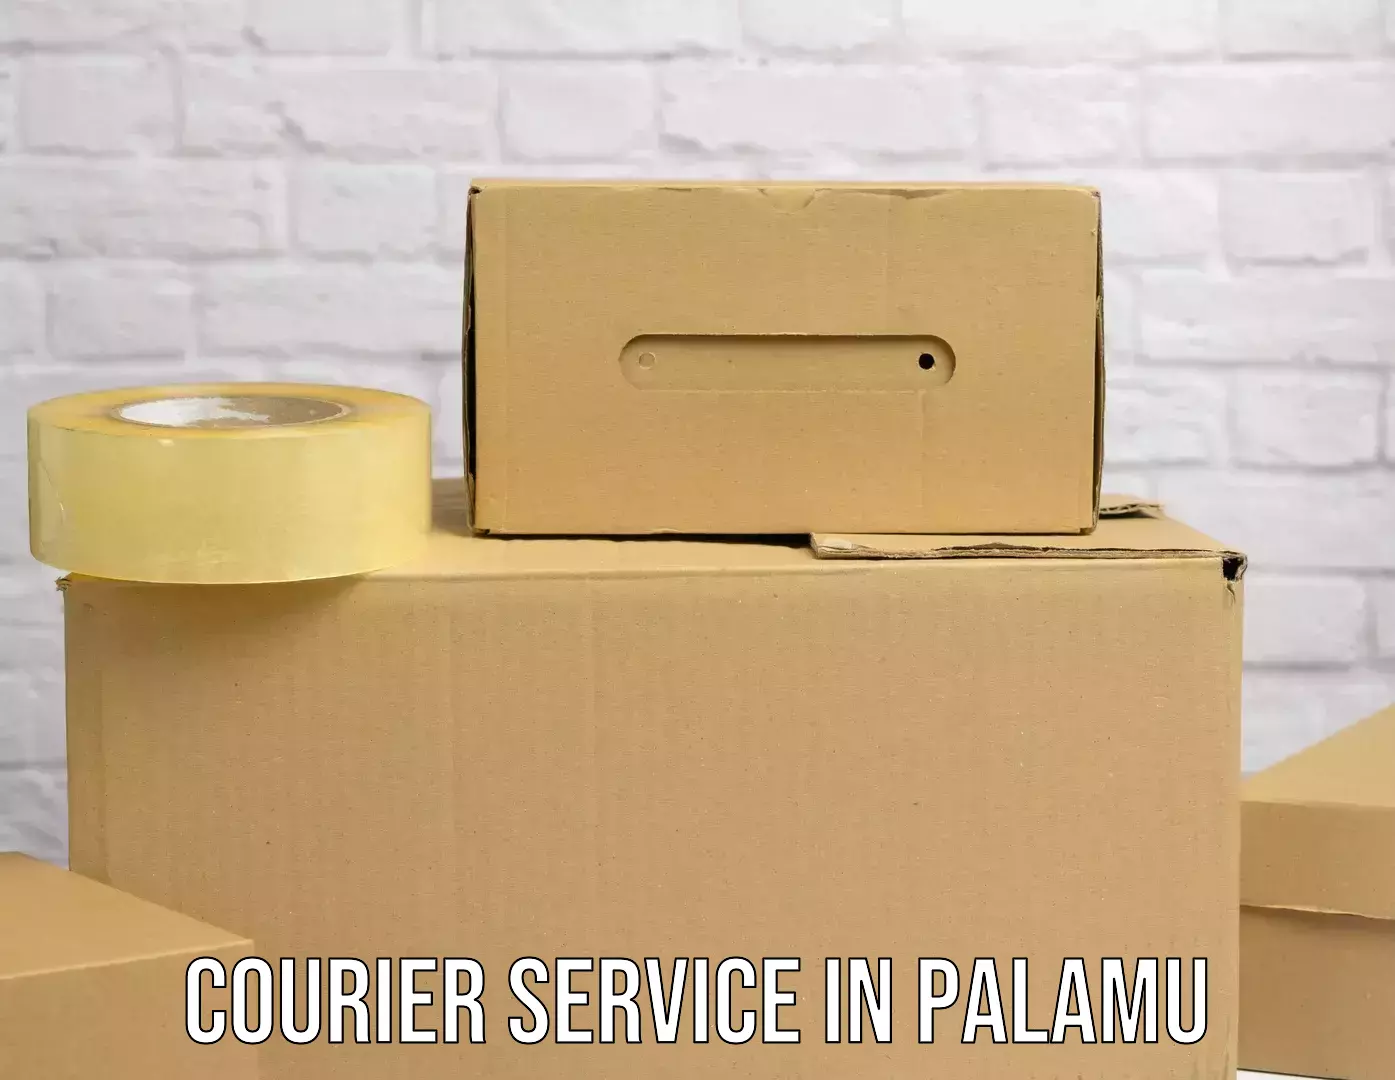 High-priority parcel service in Palamu